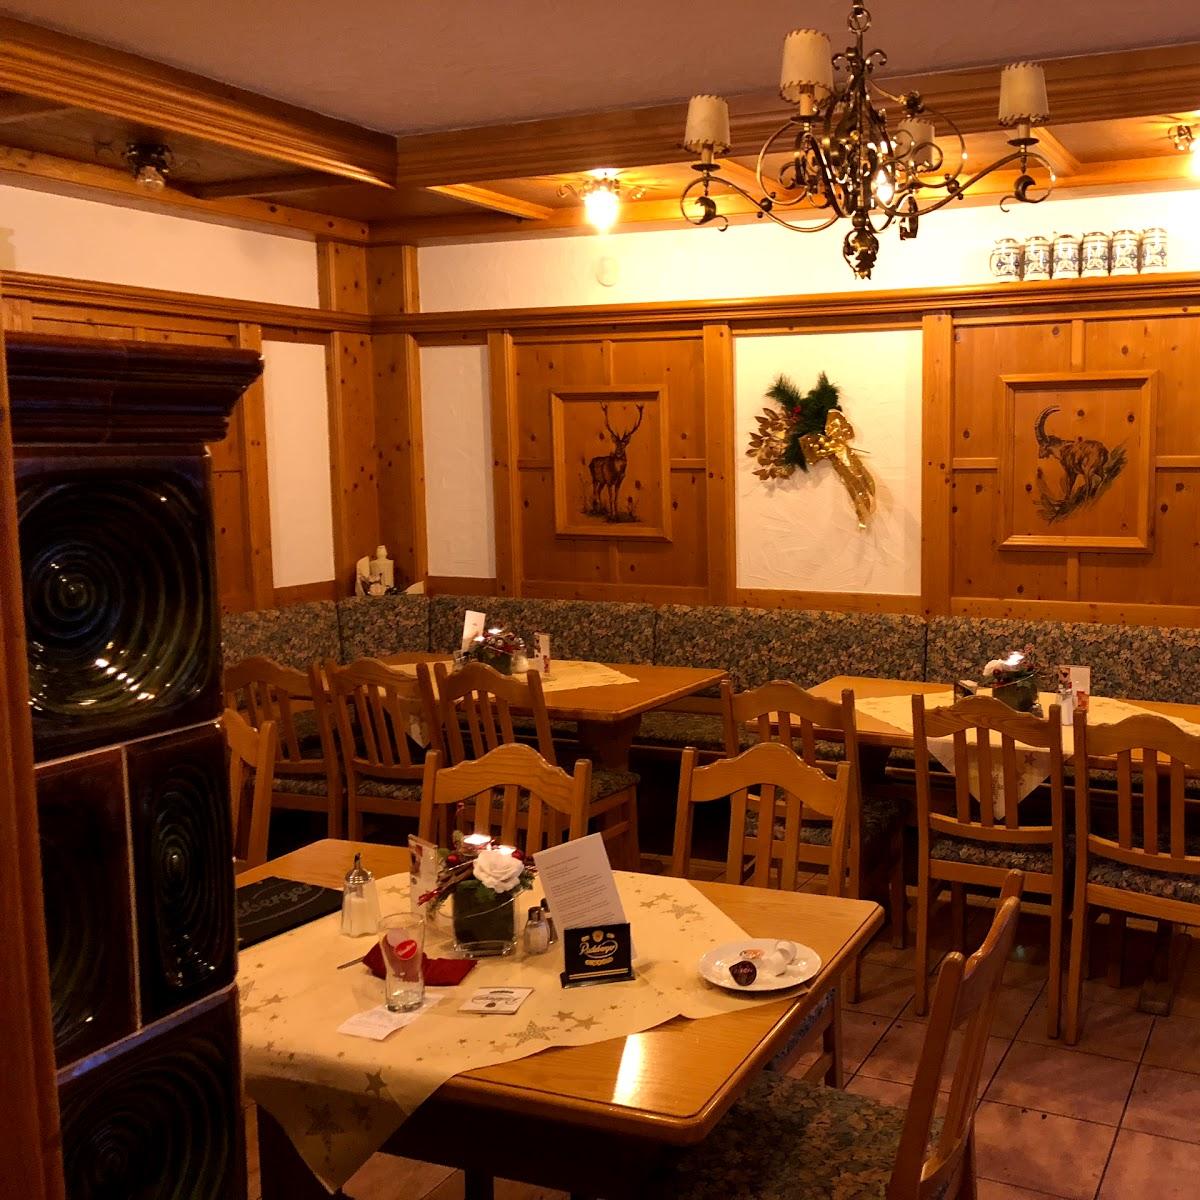 Restaurant "Bergstüb´l Josephshöhe" in Südharz